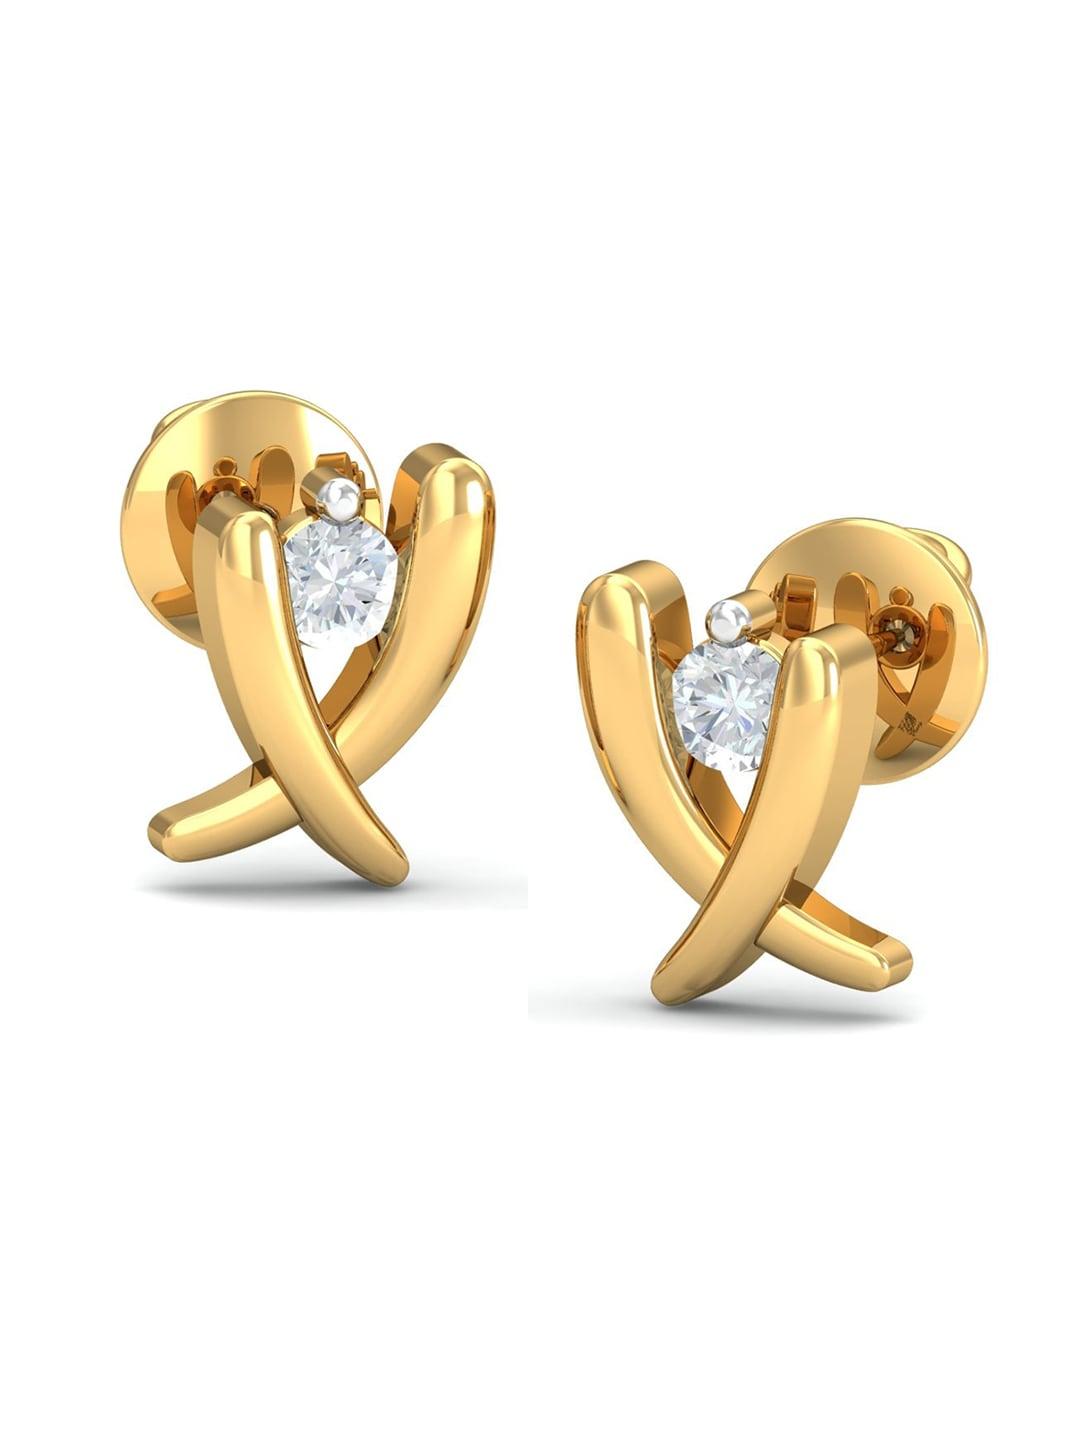 KUBERBOX 18KT Gold Diamond Stud Earrings- 1.68 gm